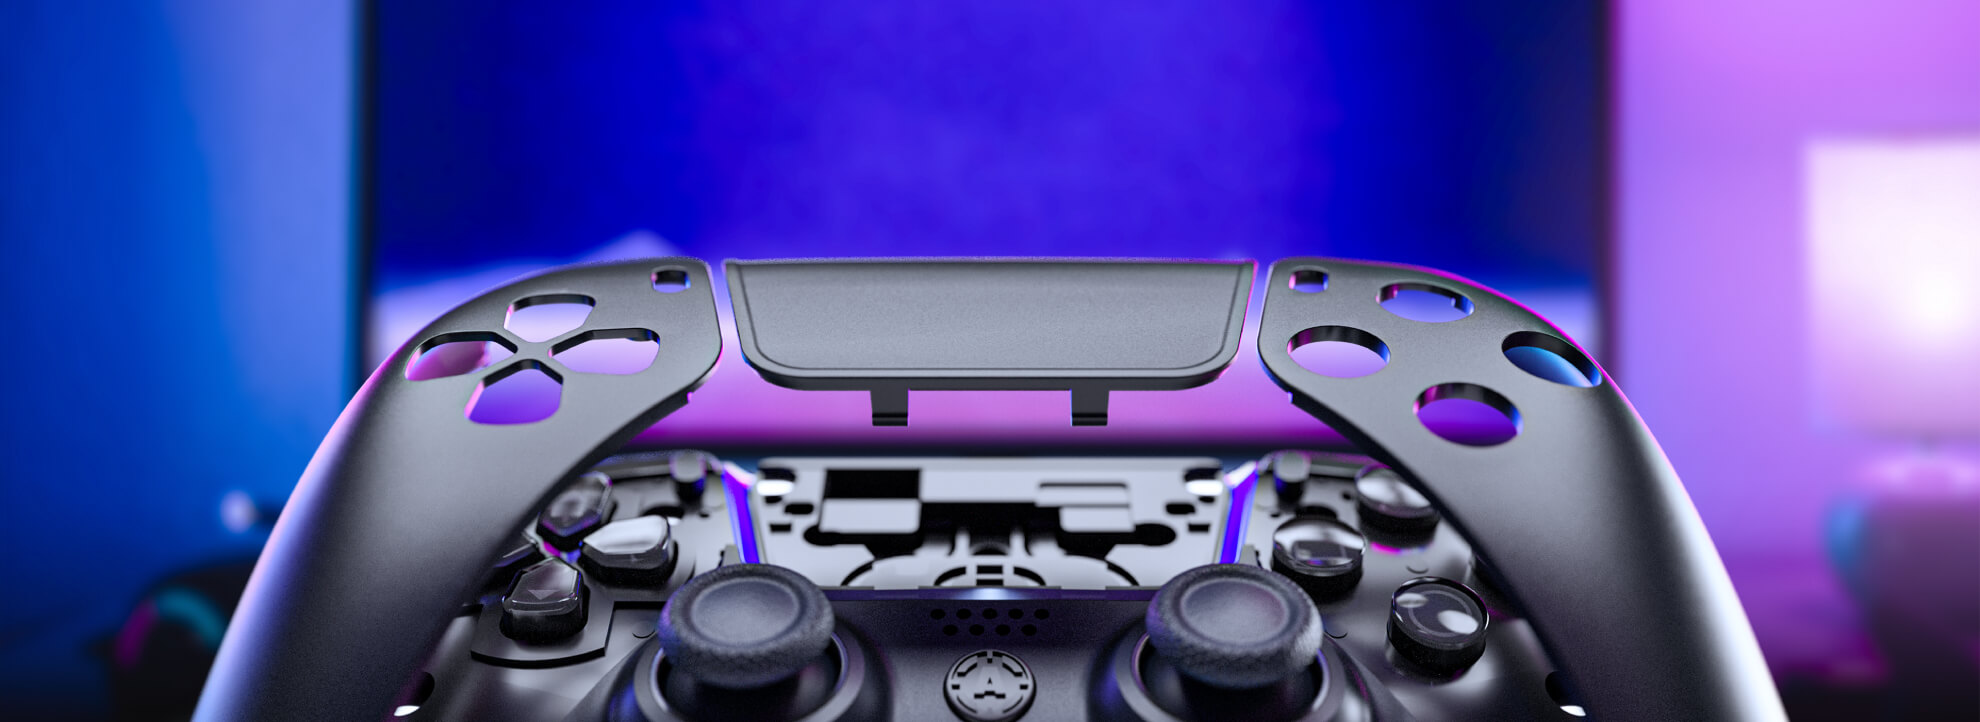 PS5: Controller und Konsolen-Cover im Metallic-Look jetzt